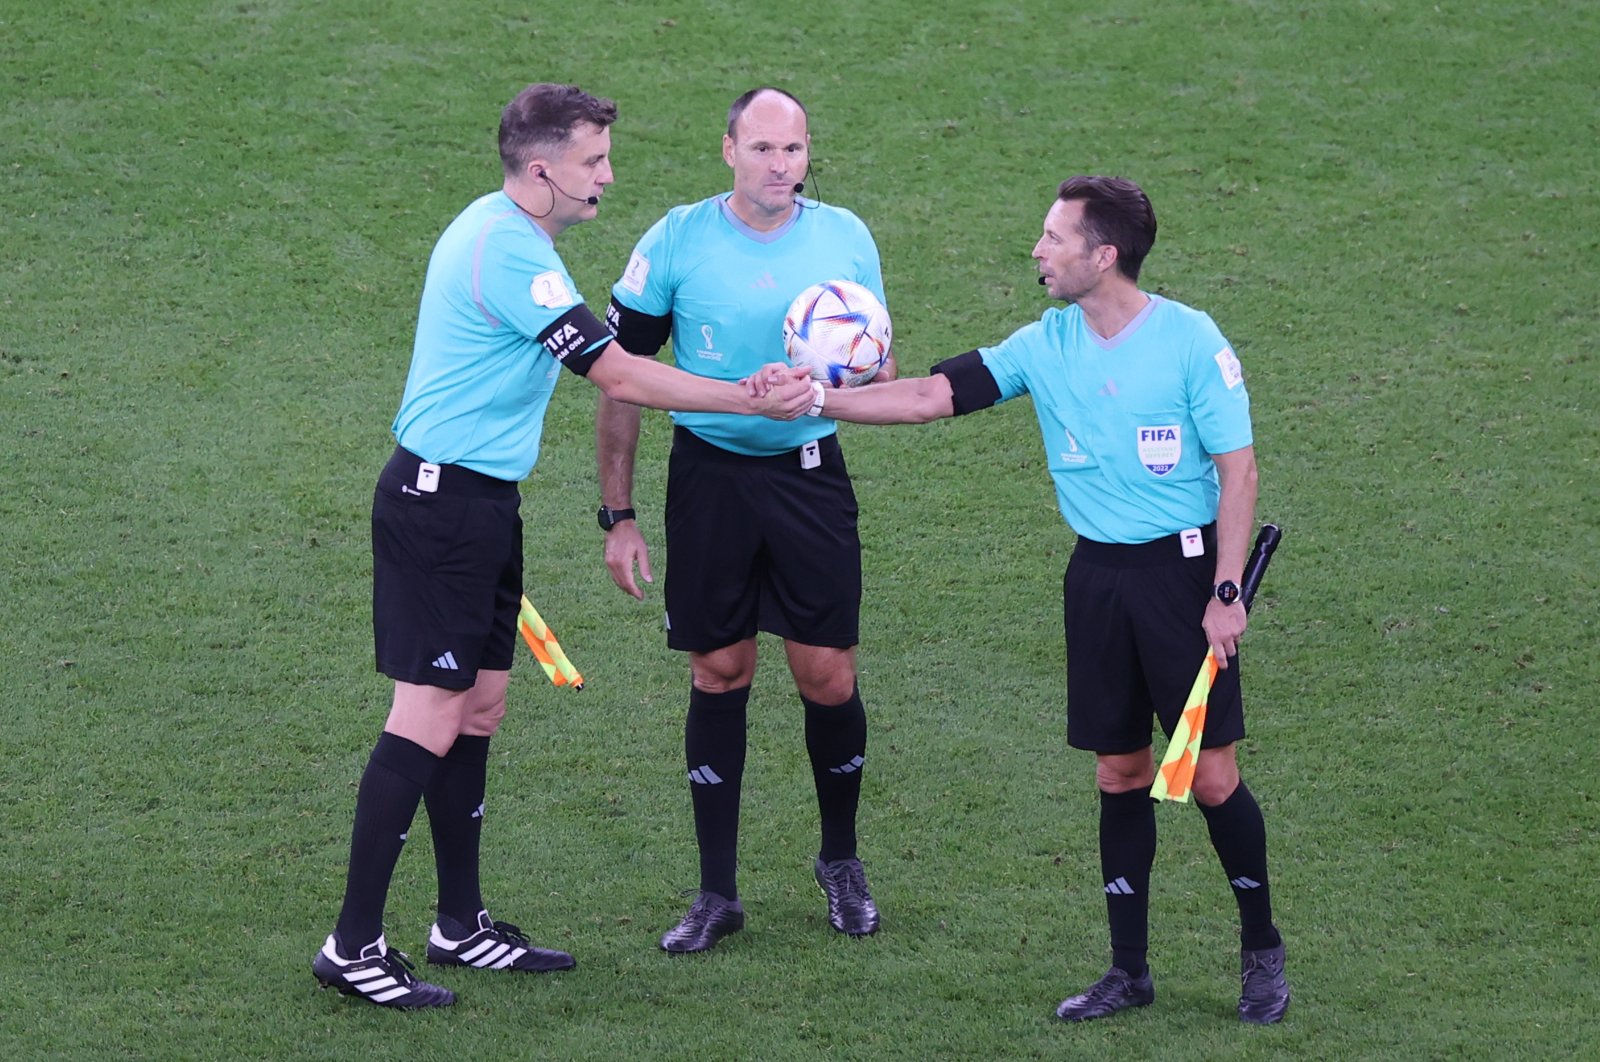 Spanish referee Antonio Mateu Lahoz (C) and his assistants during a FIFA World Cup match, Doha, Qatar, Nov. 25, 2022. (EPA Photo)